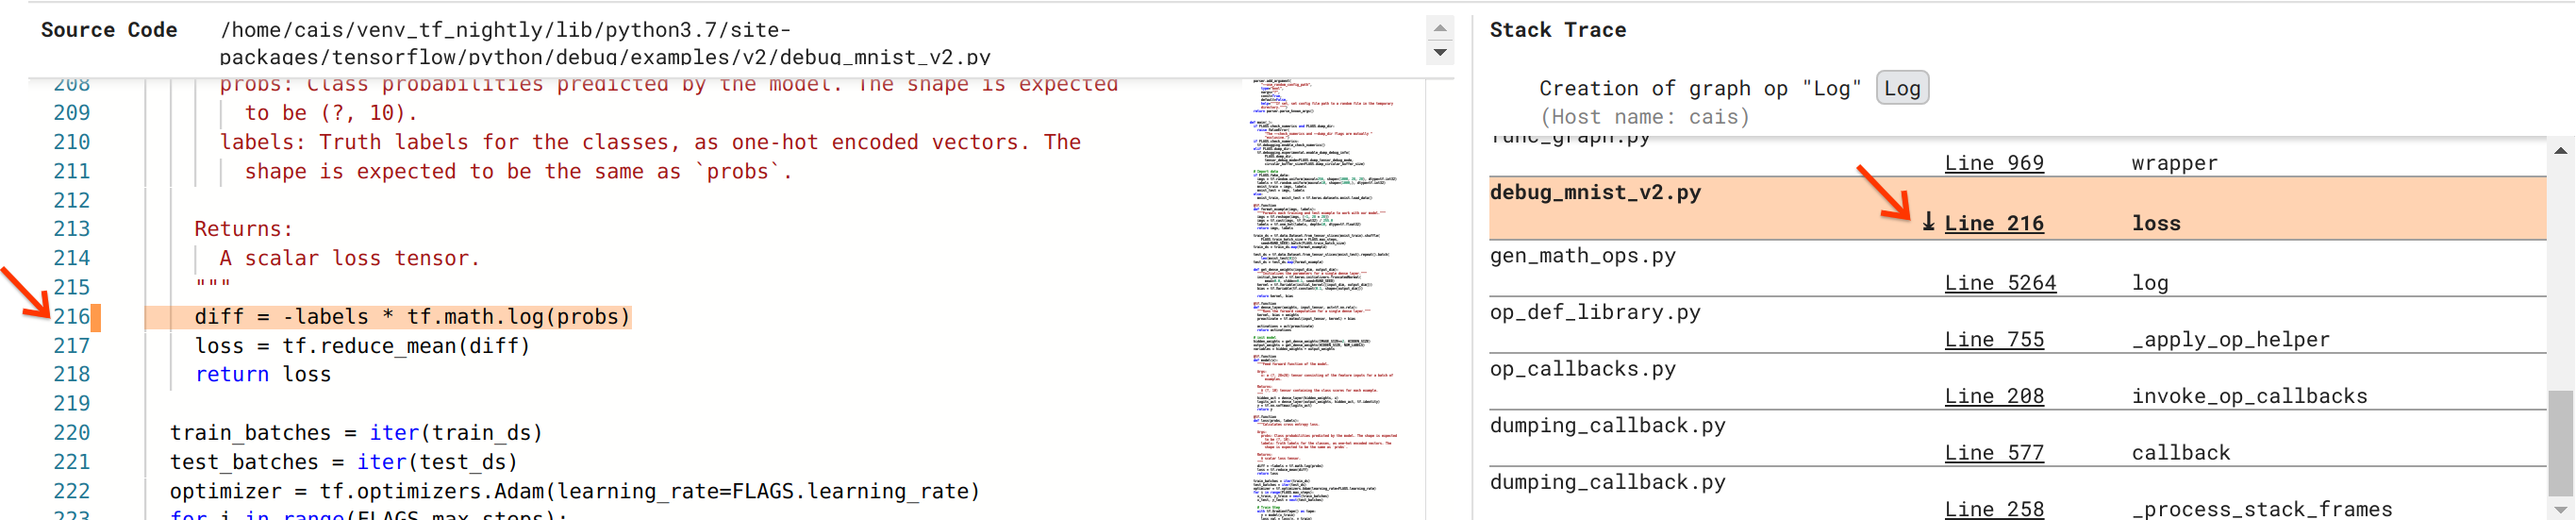 Debugger V2: Source code and stack trace